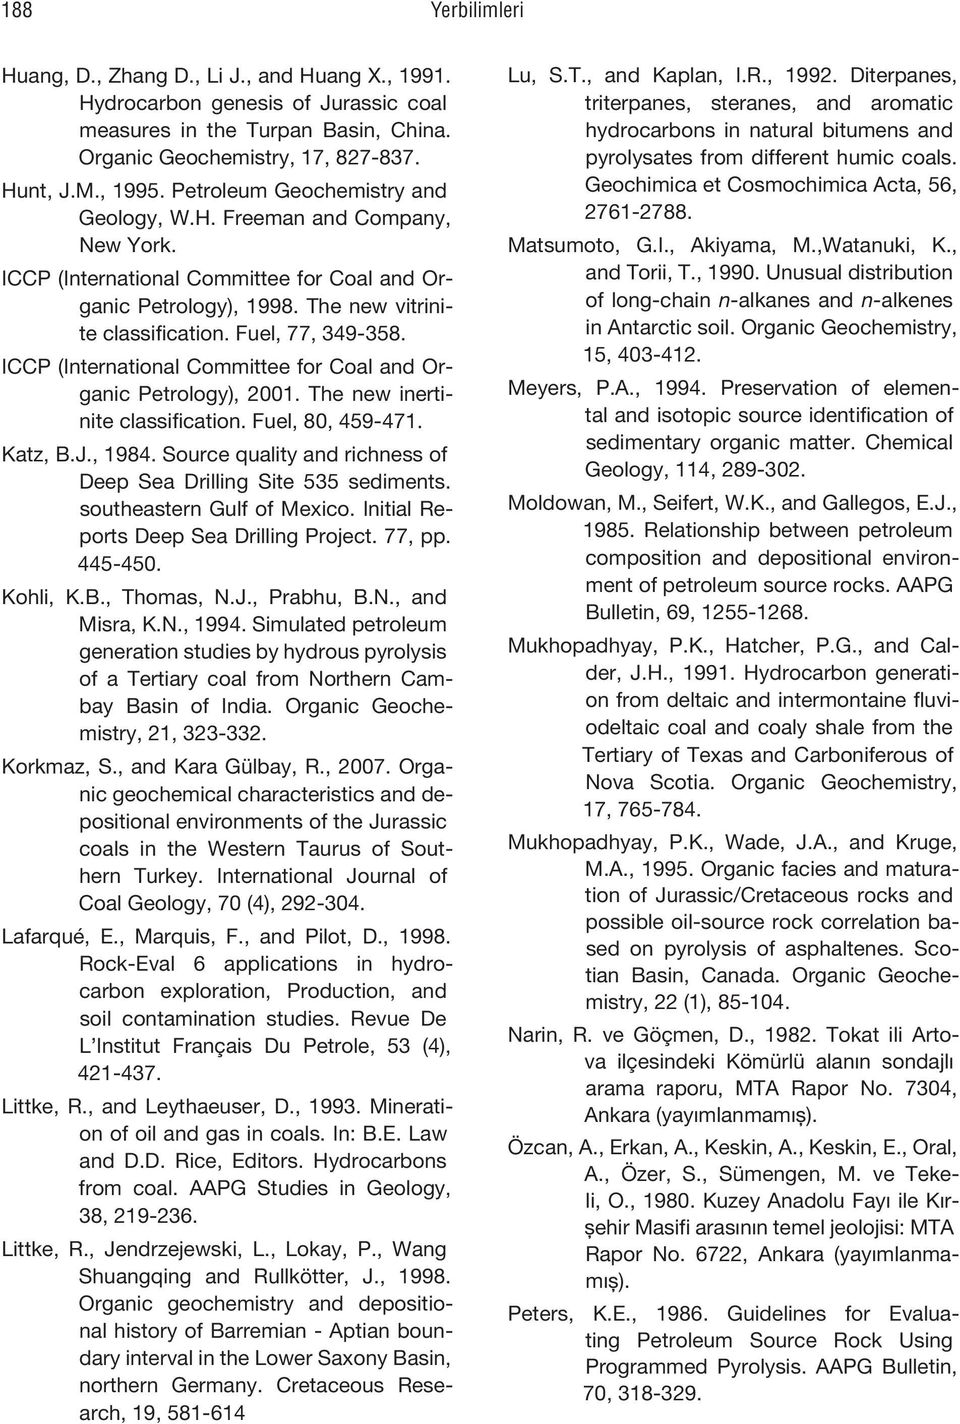 ICCP (International Committee for Coal and Organic Petrology), 21. The new inertinite classification. Fuel, 8, 459-471. Katz, B.J., 1984.